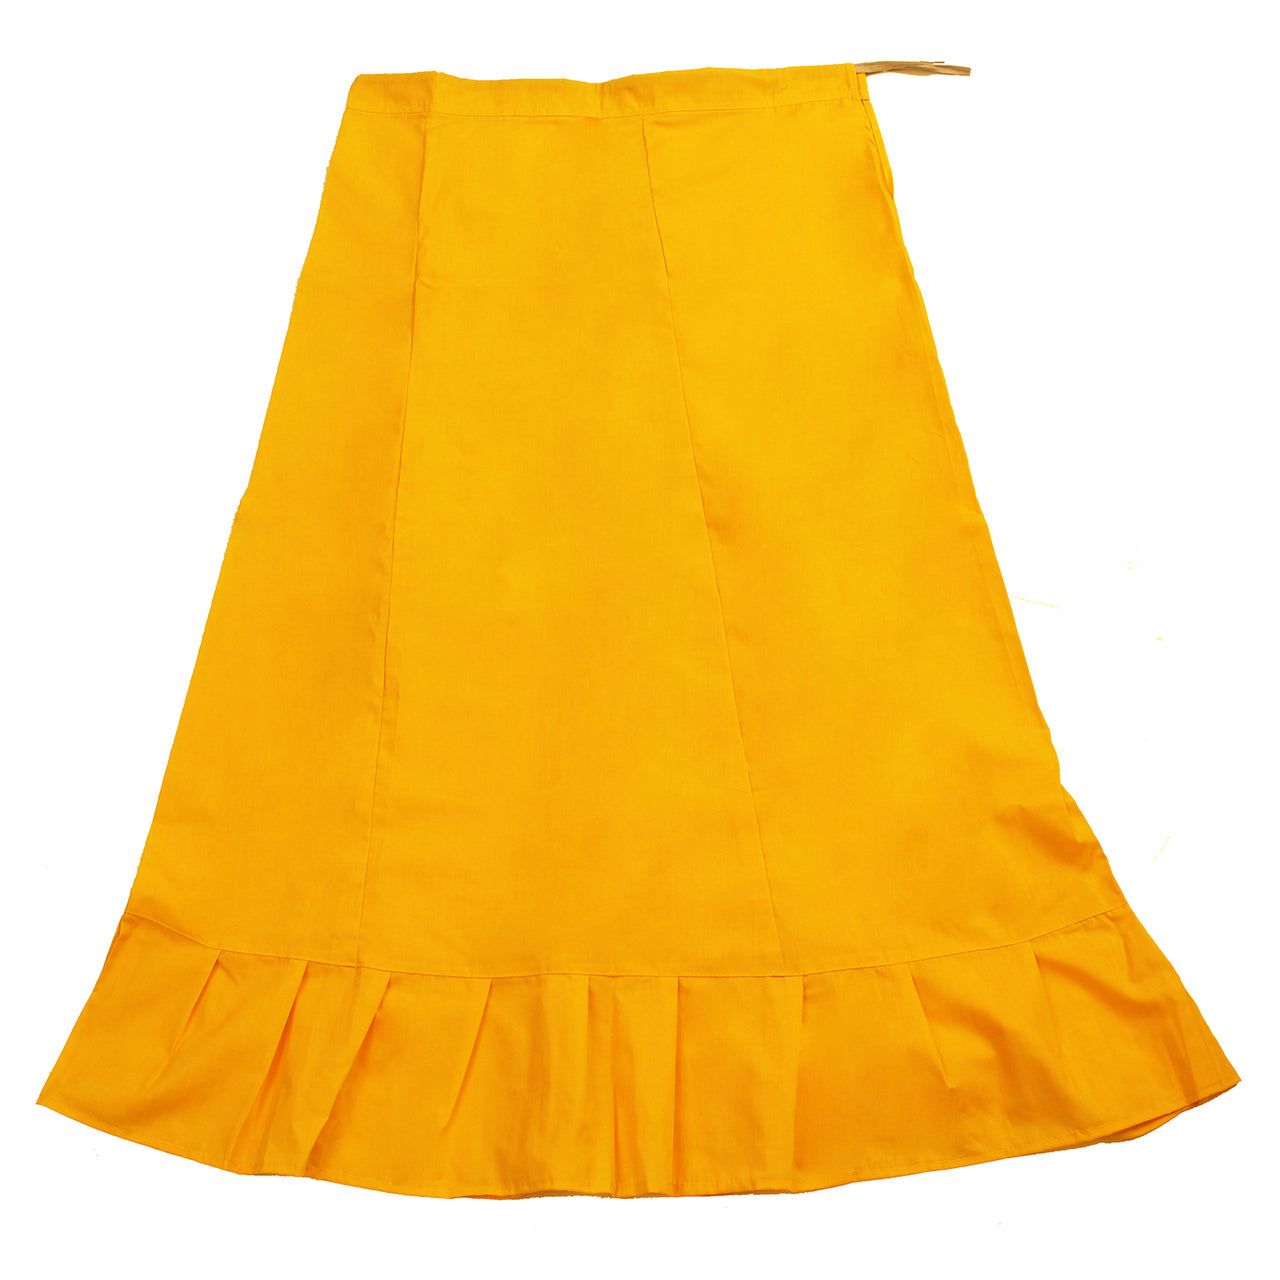 Gold/Mustard - Sari (Saree) Petticoat - Available in S, M, L & XL - Underskirts For Sari's